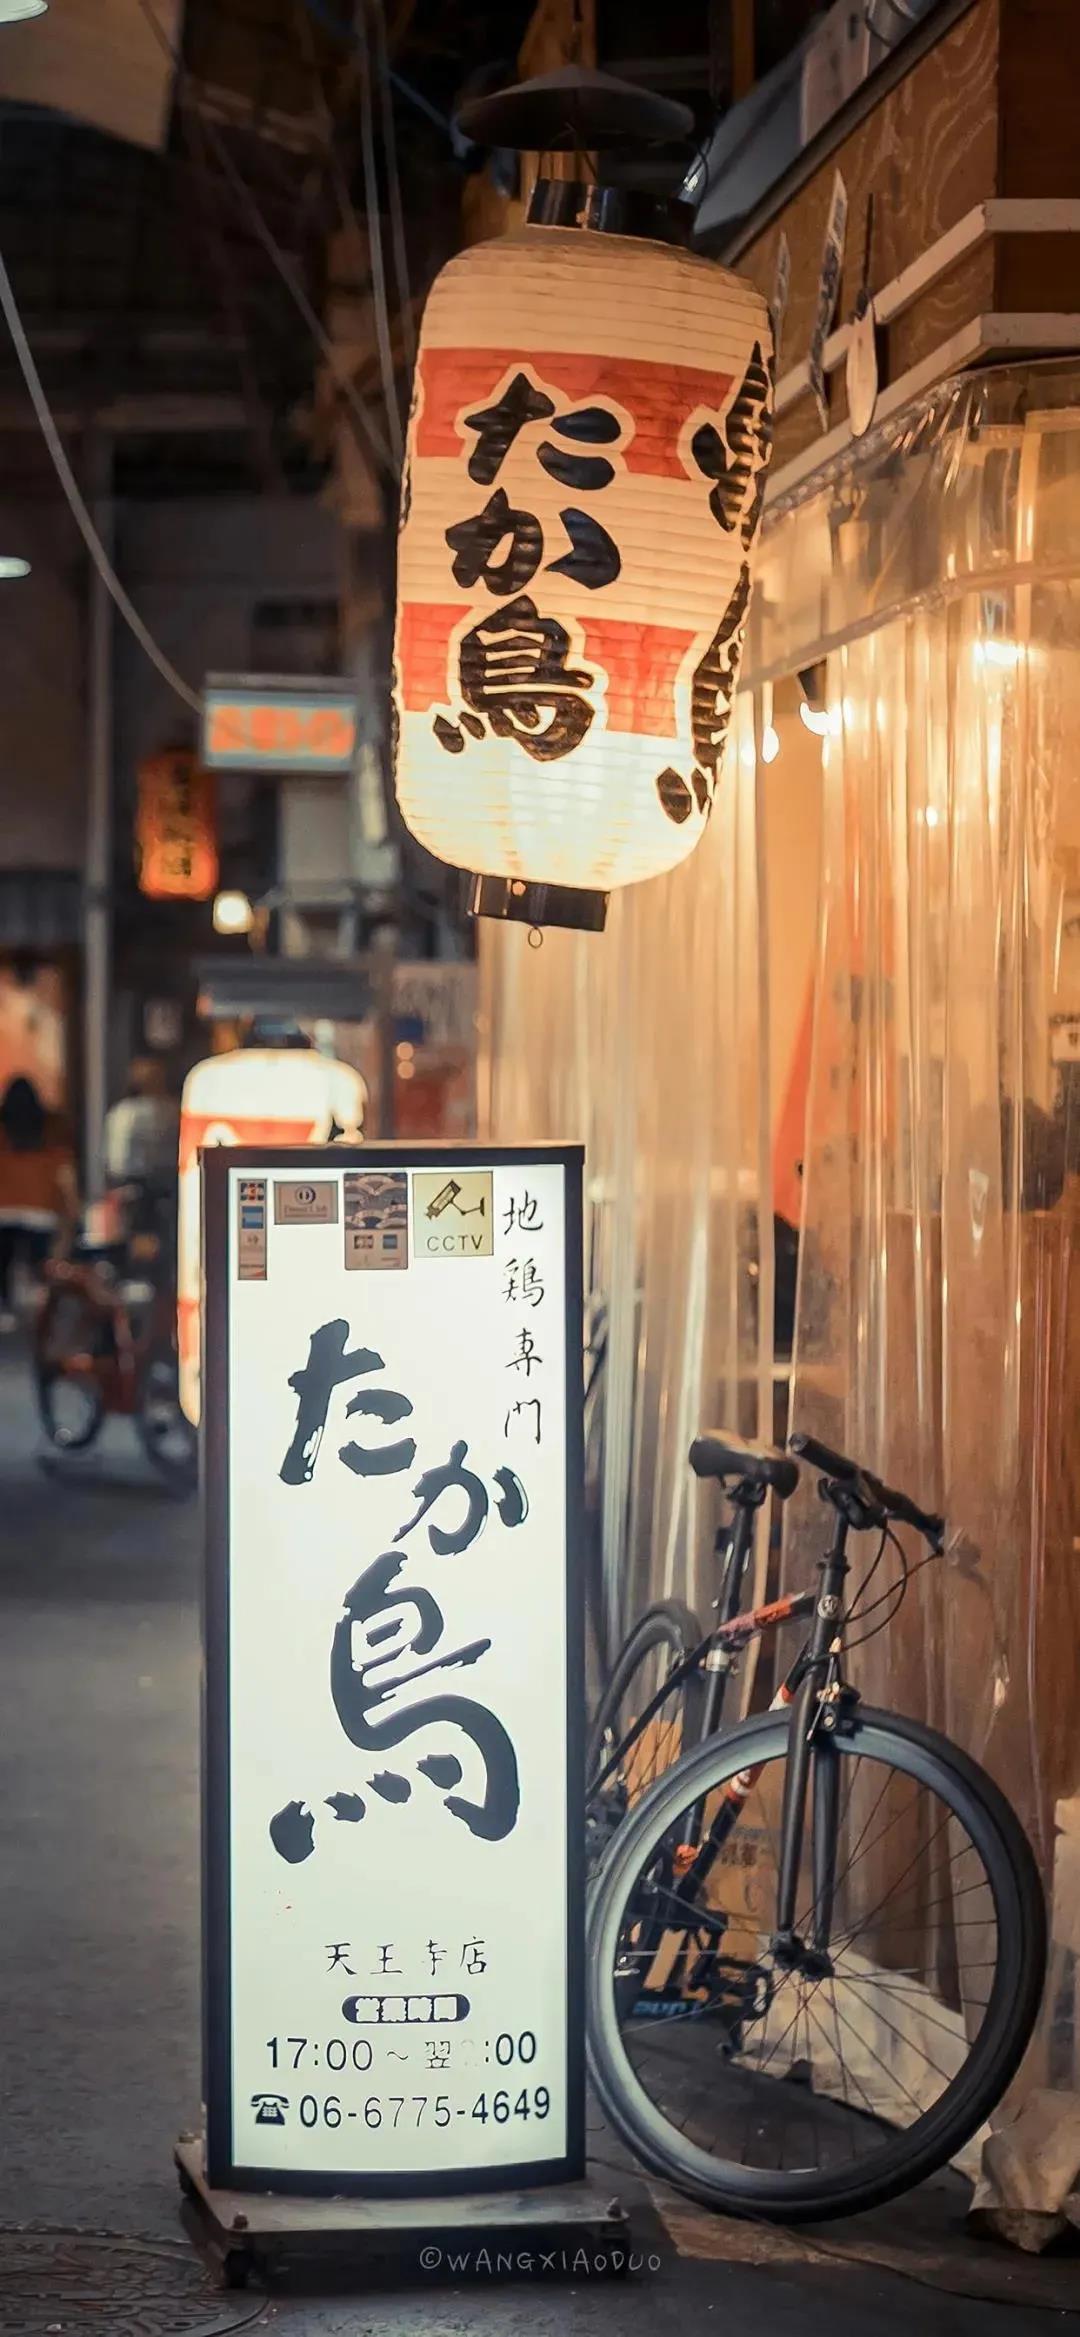 Japan Bicycle Street Art Vertical Japanese 1080x2337